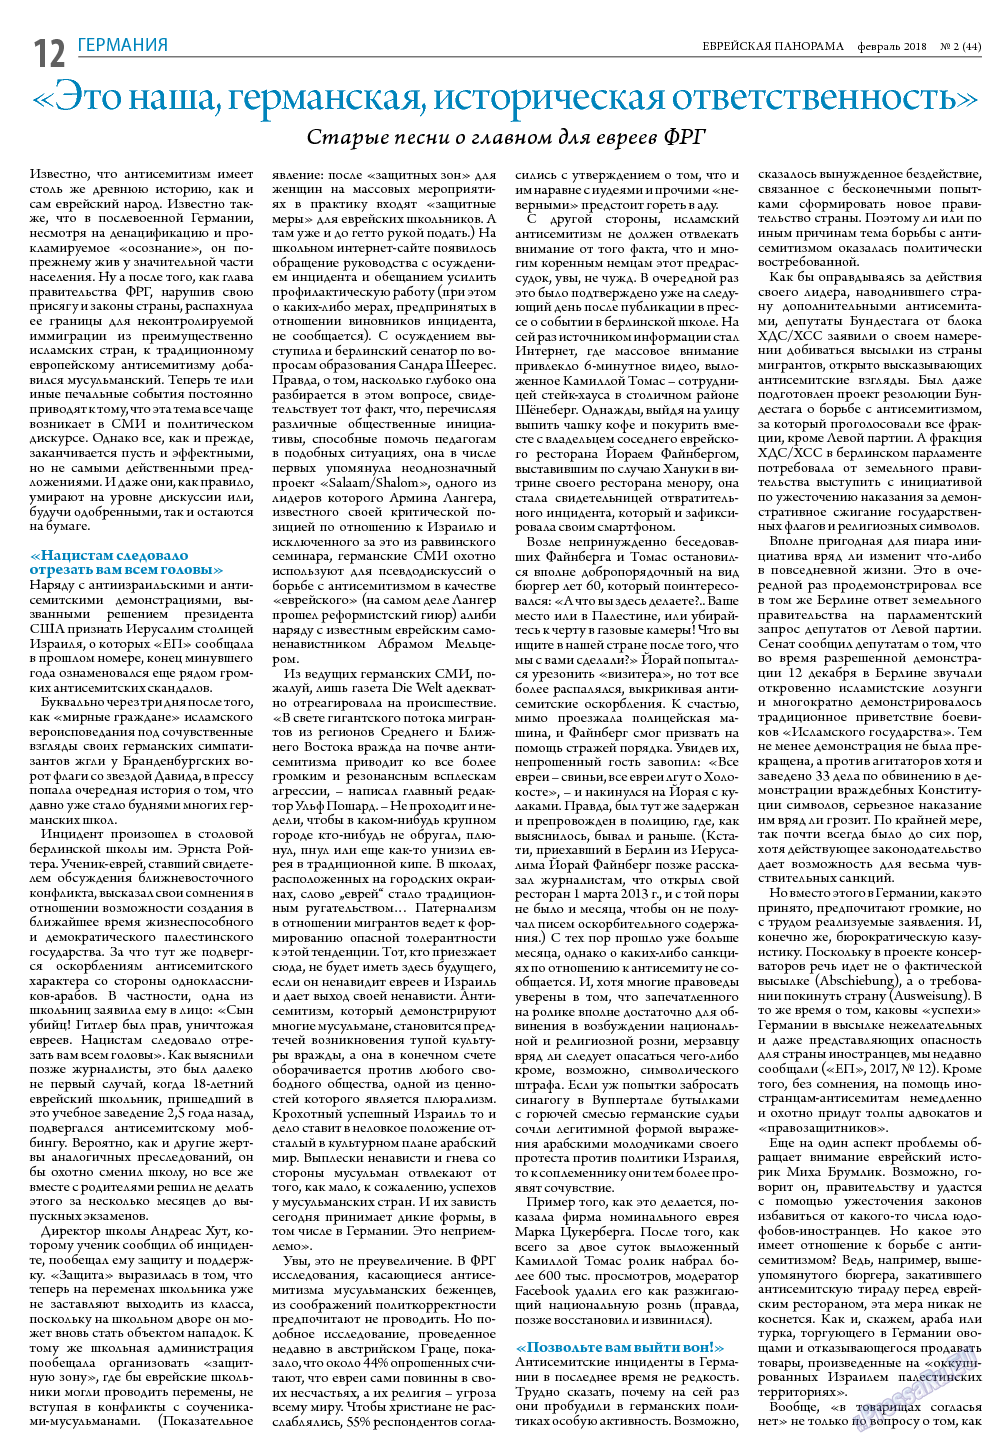 Еврейская панорама, газета. 2018 №2 стр.12